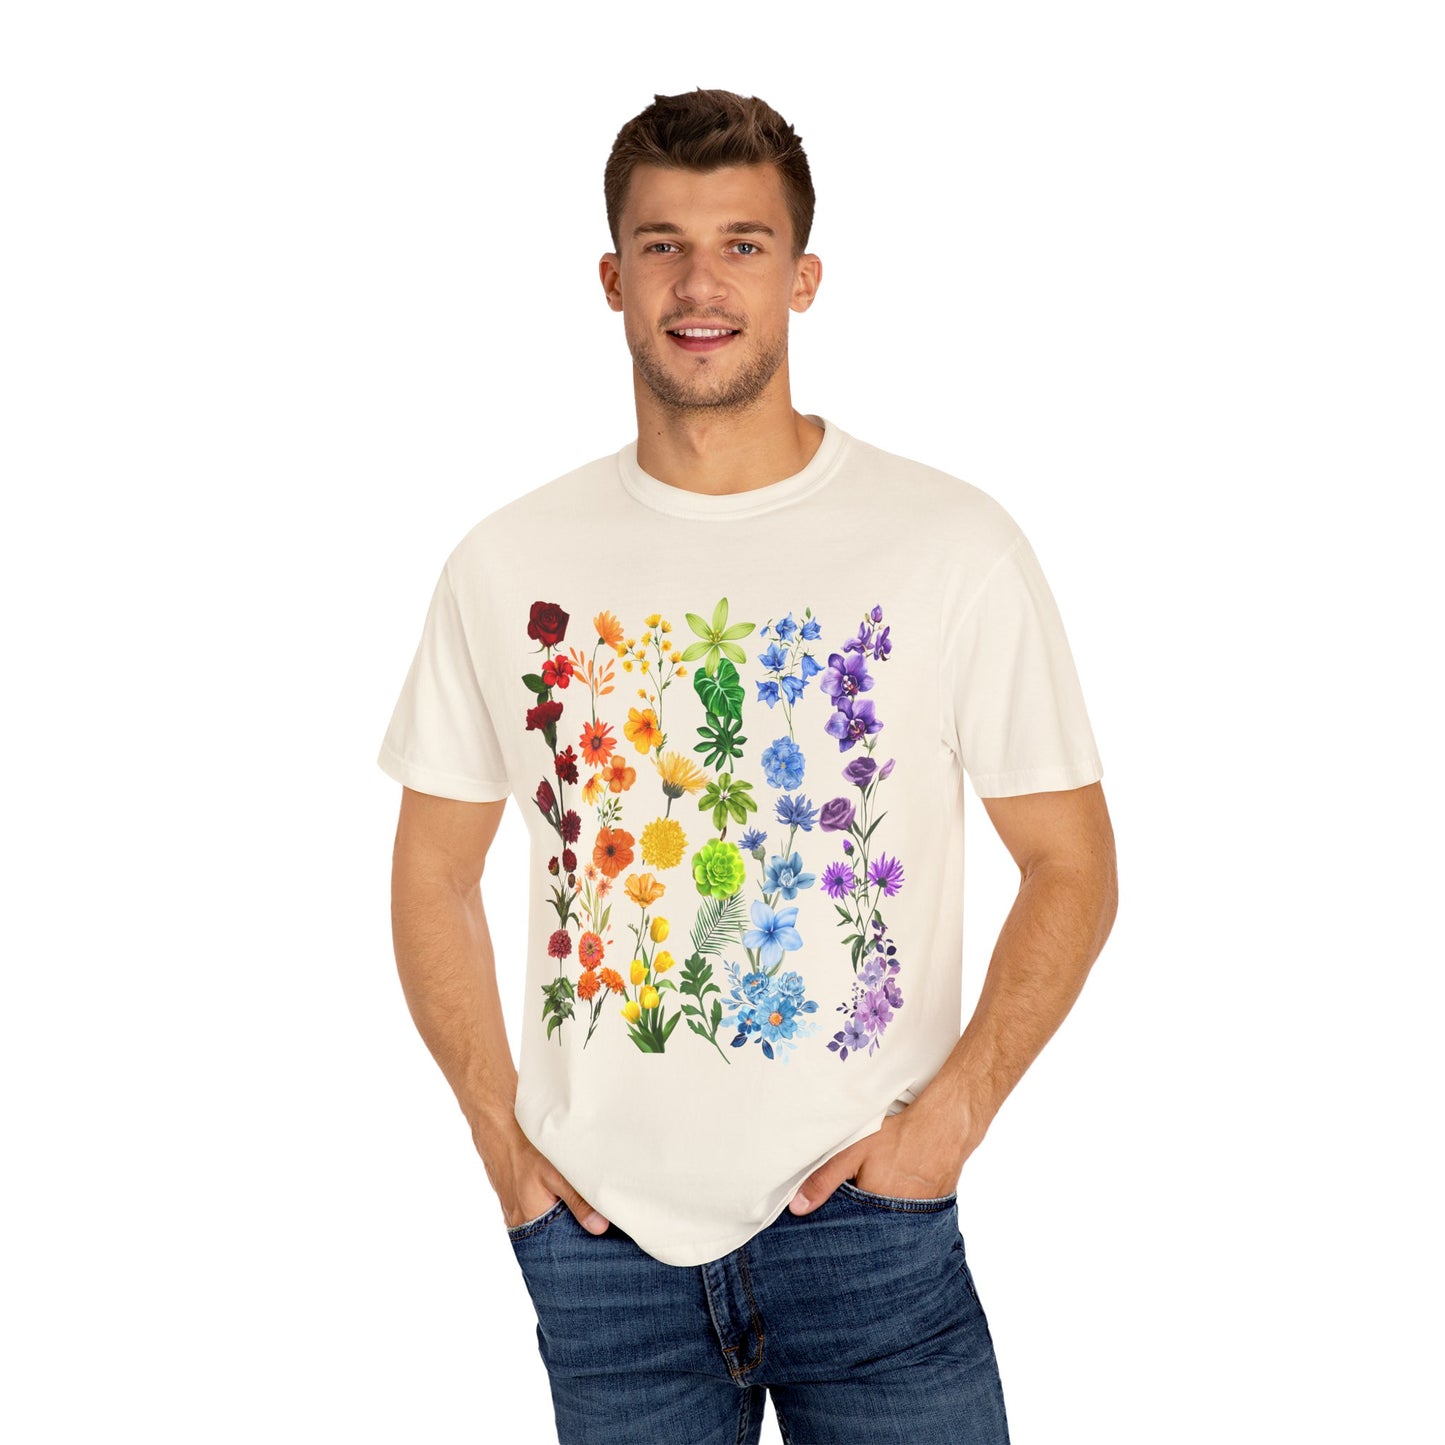 Pride Flowers Shirt, LGBTQIA+ Pride Shirt, Pride Month Shirt, Gay Rights Gift, Equality Shirt, LGBTQIA Supporter Shirt, Proud Shirt, CC1618